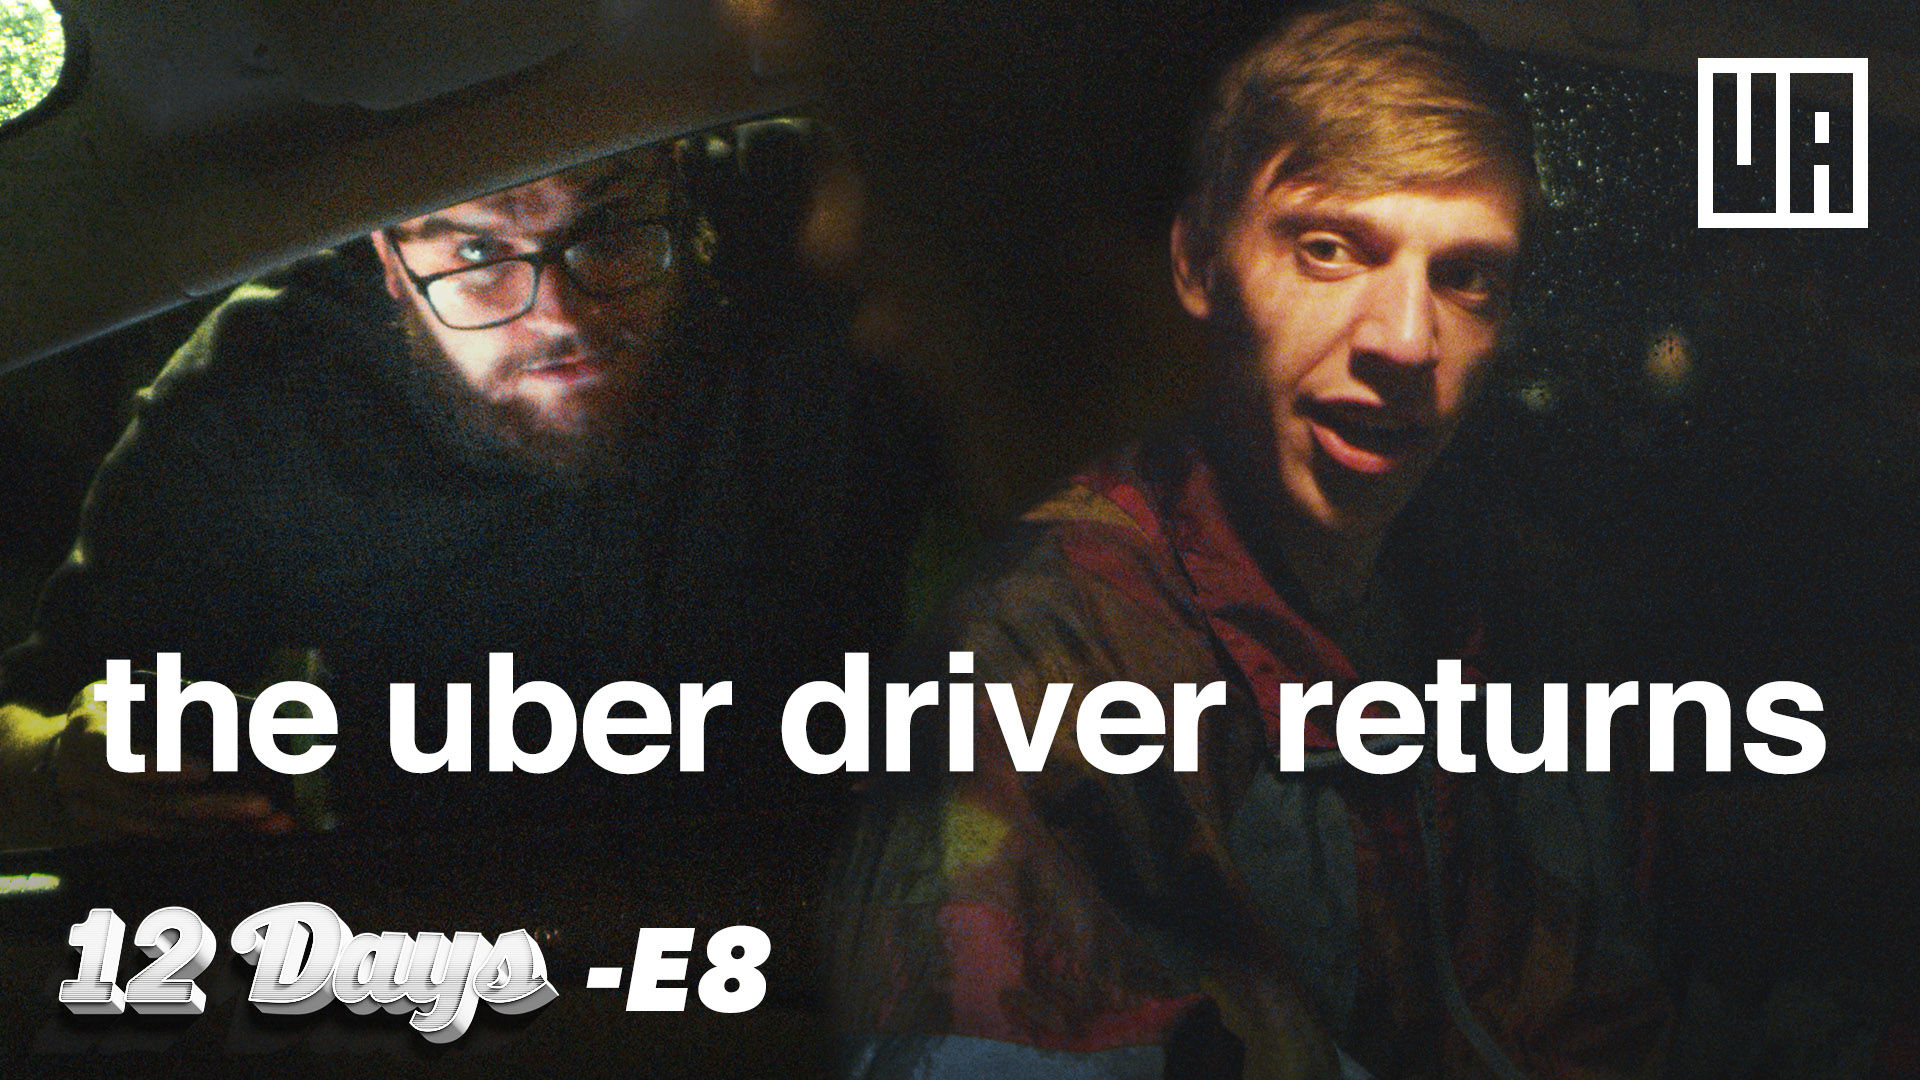 E8 - The Uber Driver Returns